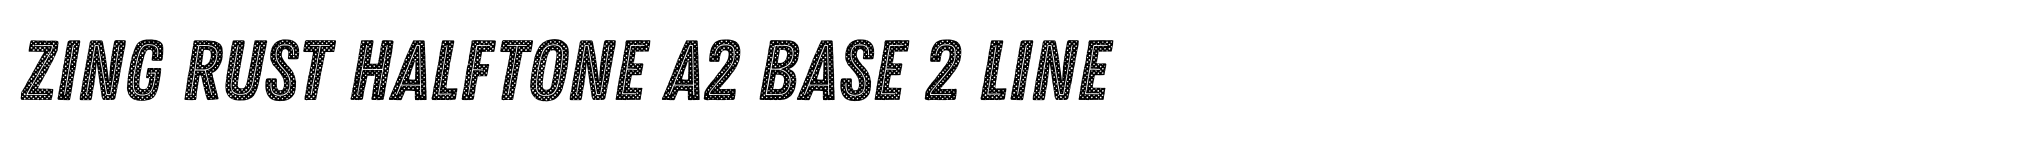 Zing Rust Halftone A2 Base 2 Line image